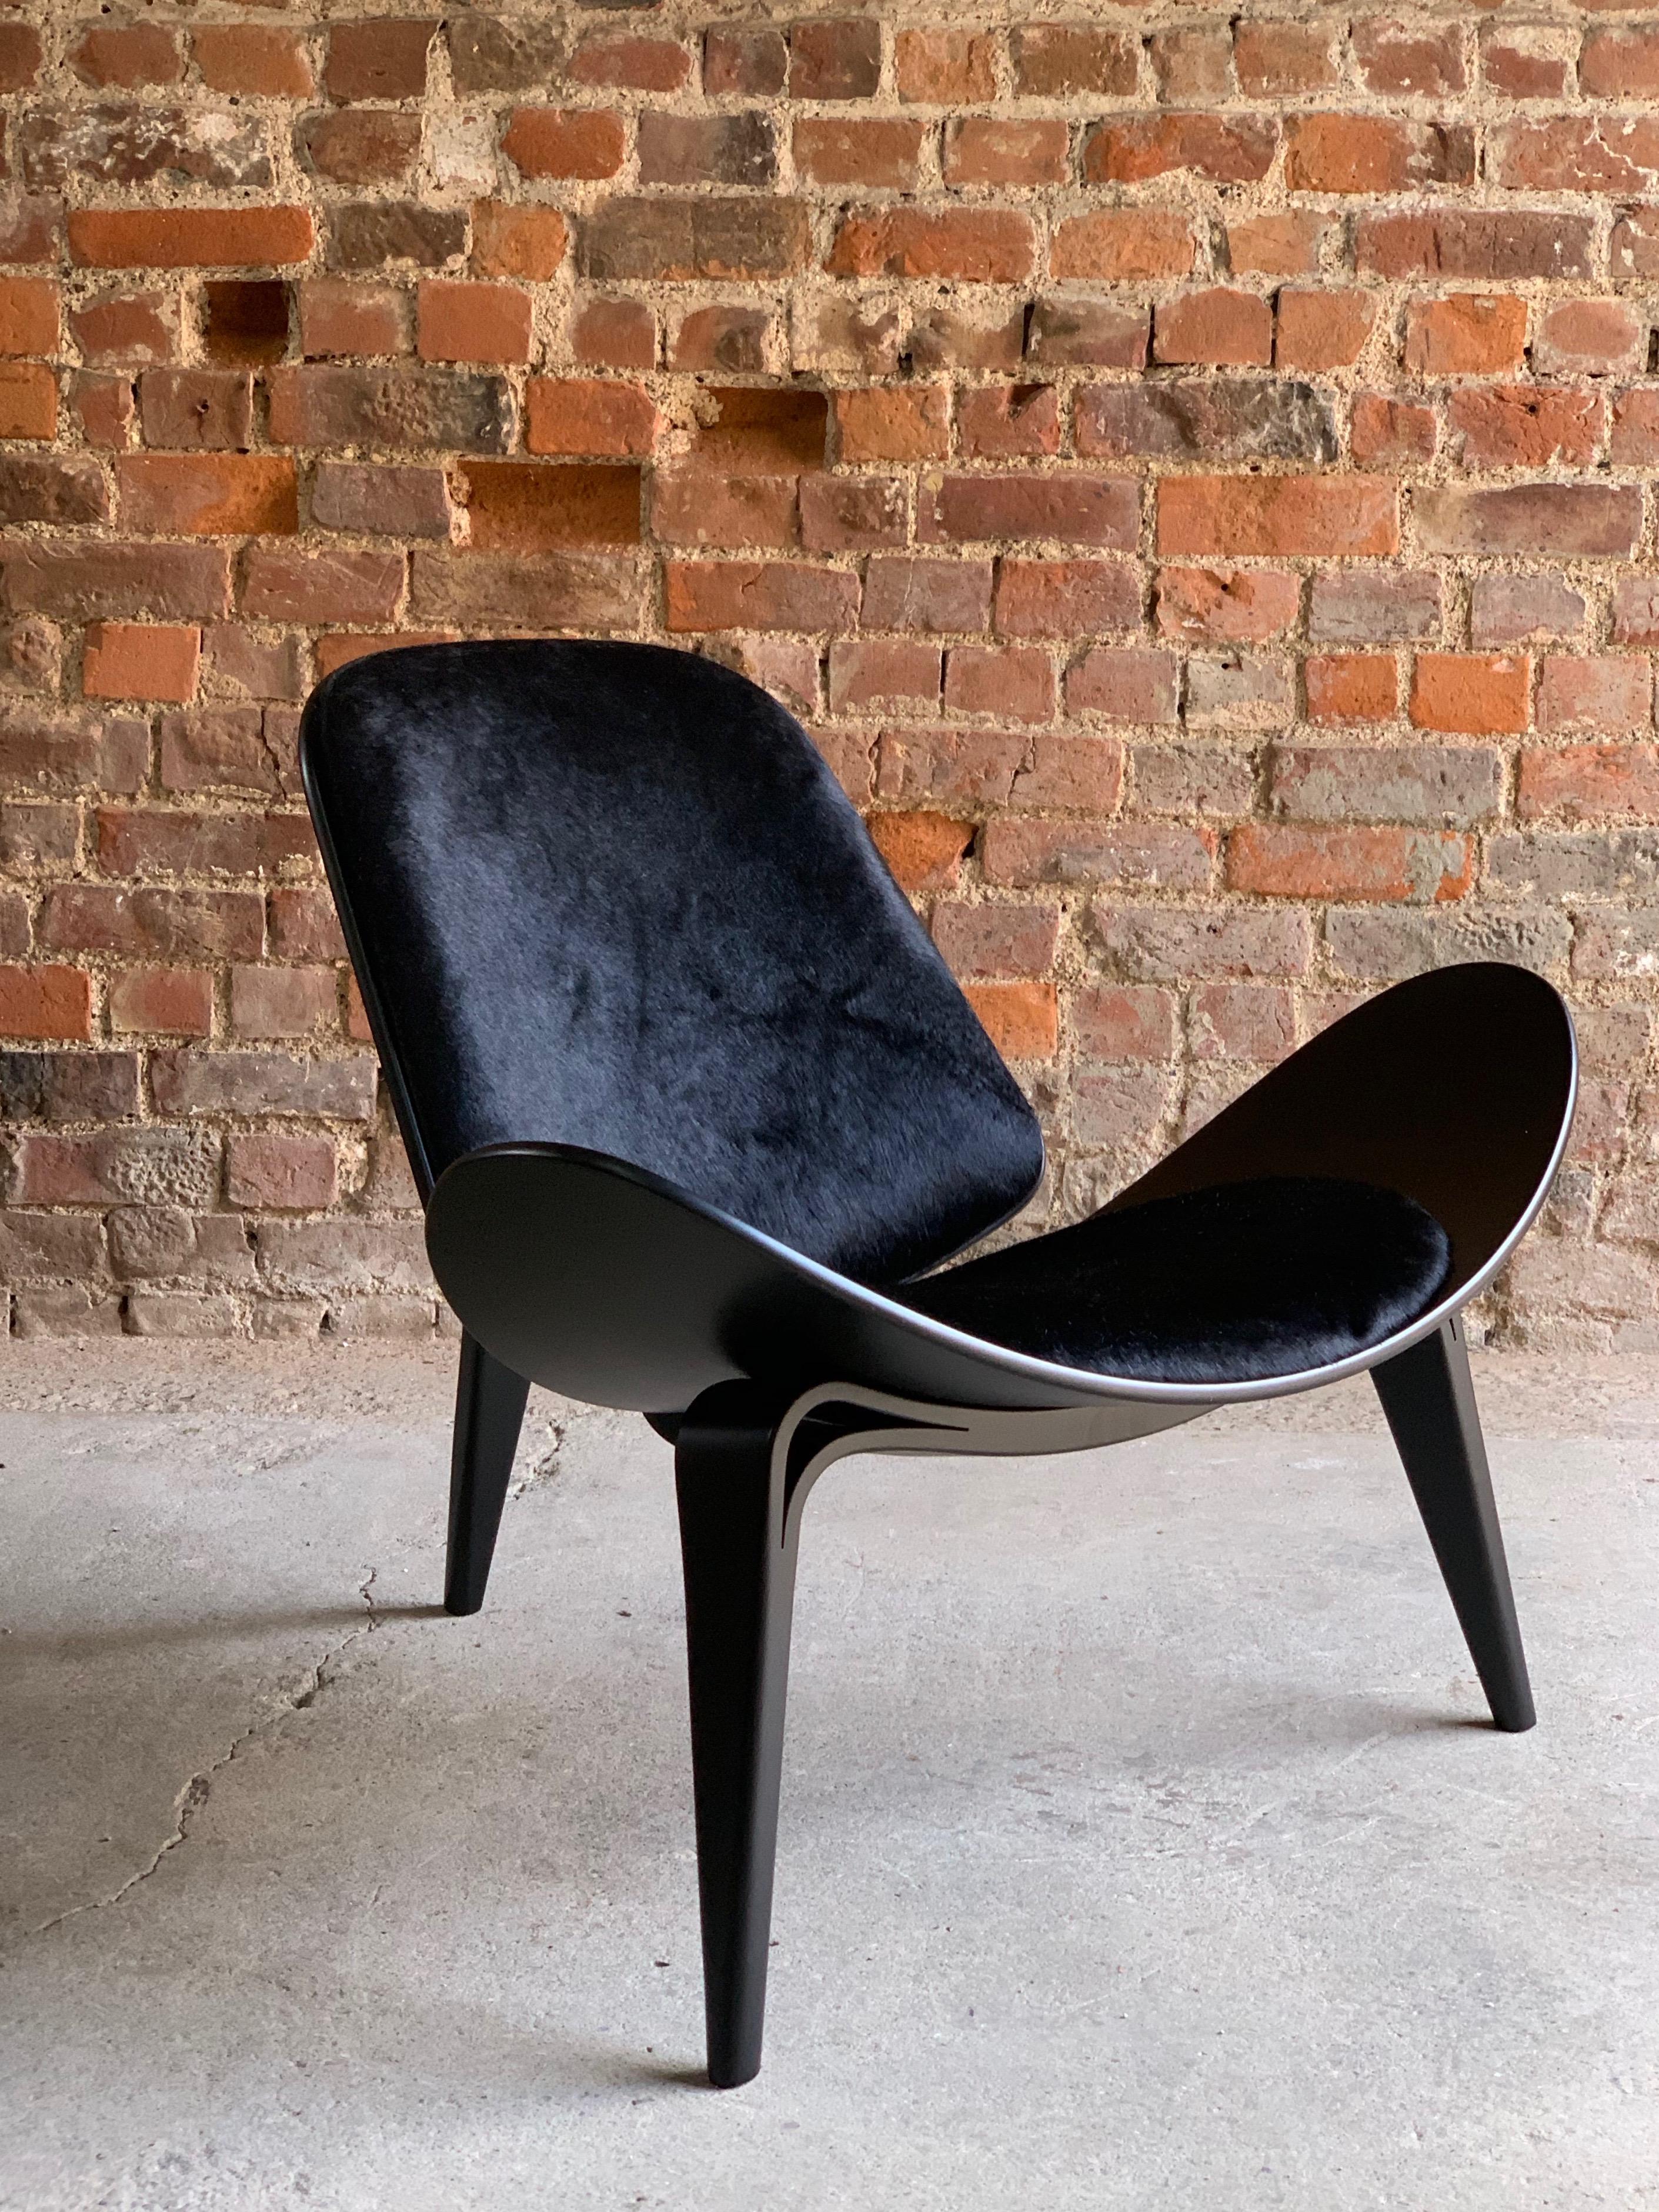 Mid-Century Modern Hans Wegner CH07 Black Shell Chair Carl Hansen & Son, Denmark, Midcentury Danish